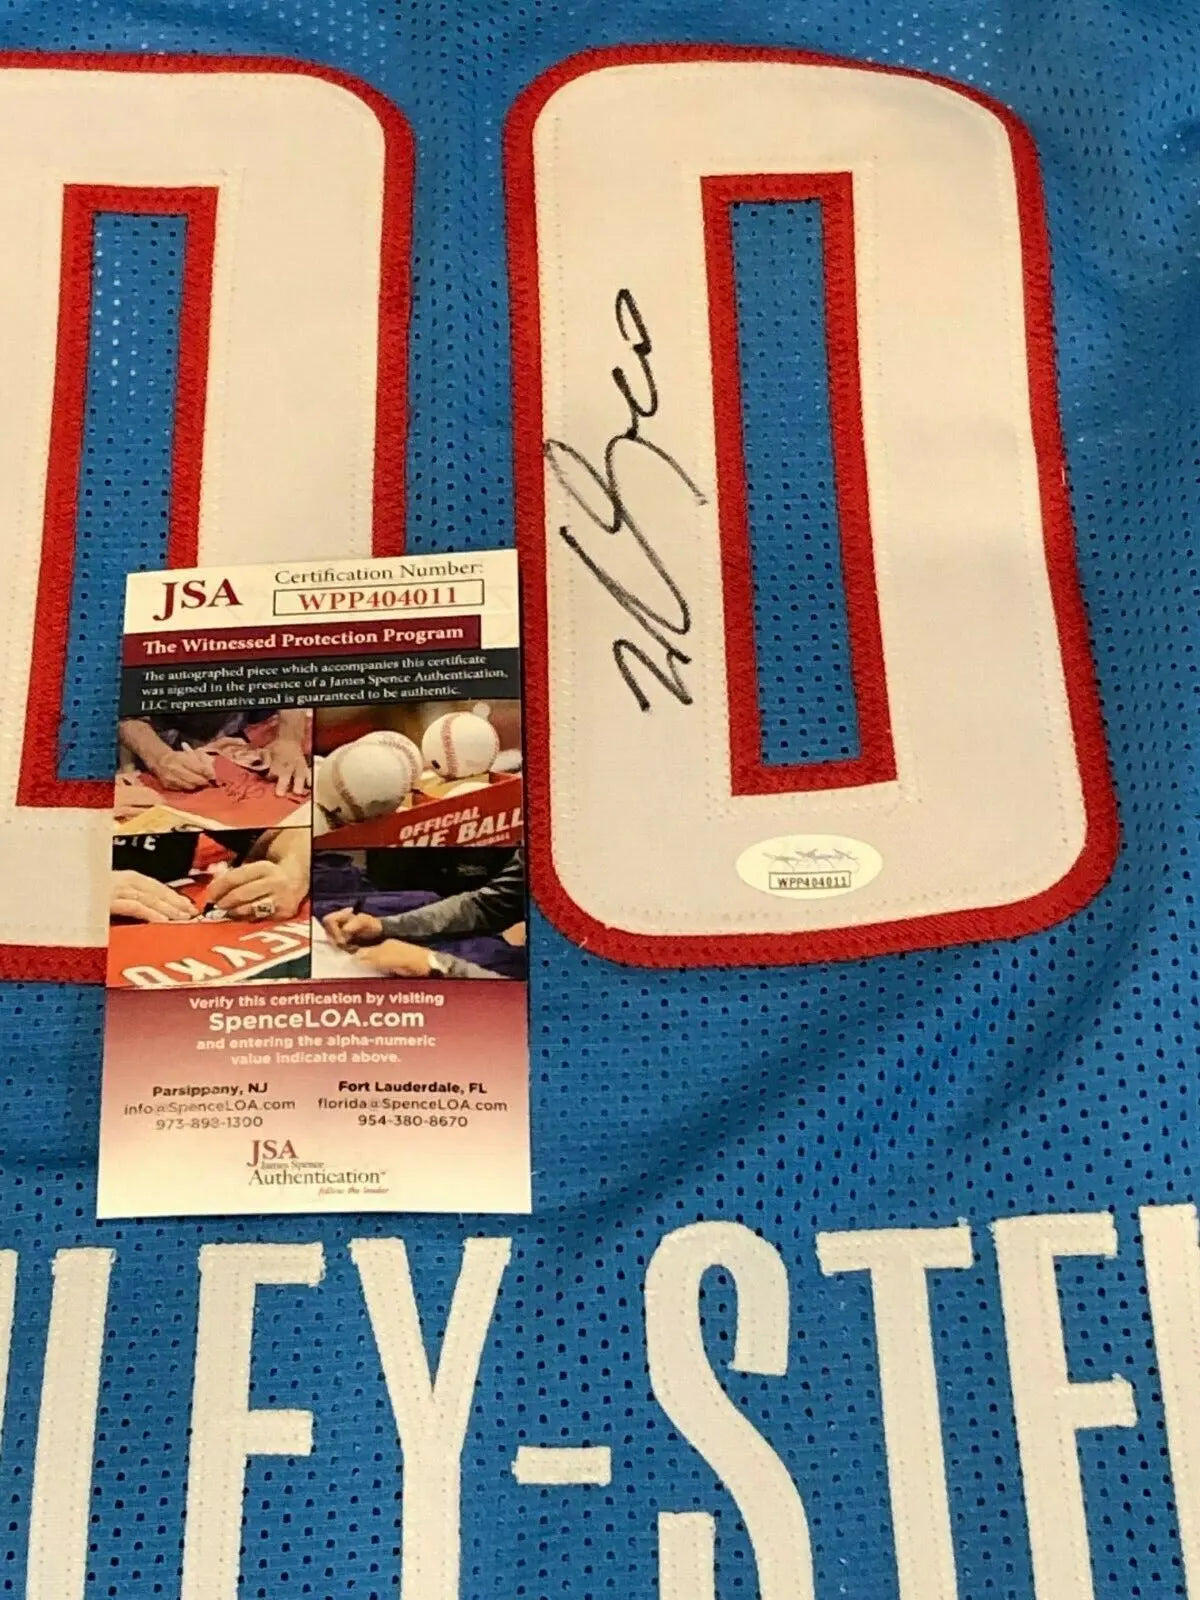 MVP Authentics Sacramento Kings Willie Cauley Stein Autographed Signed Jersey Jsa Coa 108 sports jersey framing , jersey framing